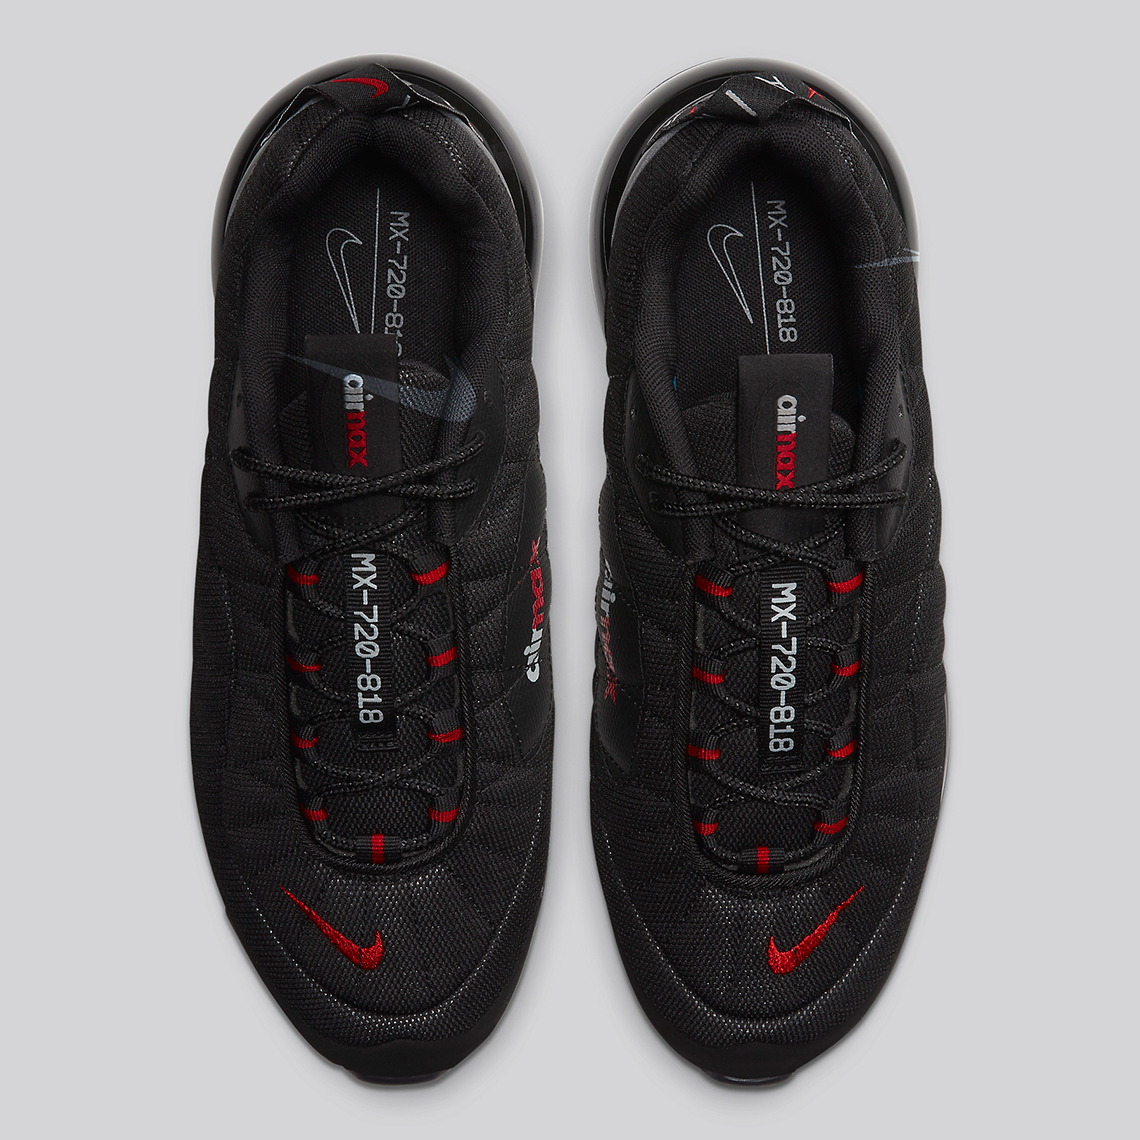 Nike Air MX 720-818 Black Red CW7476 